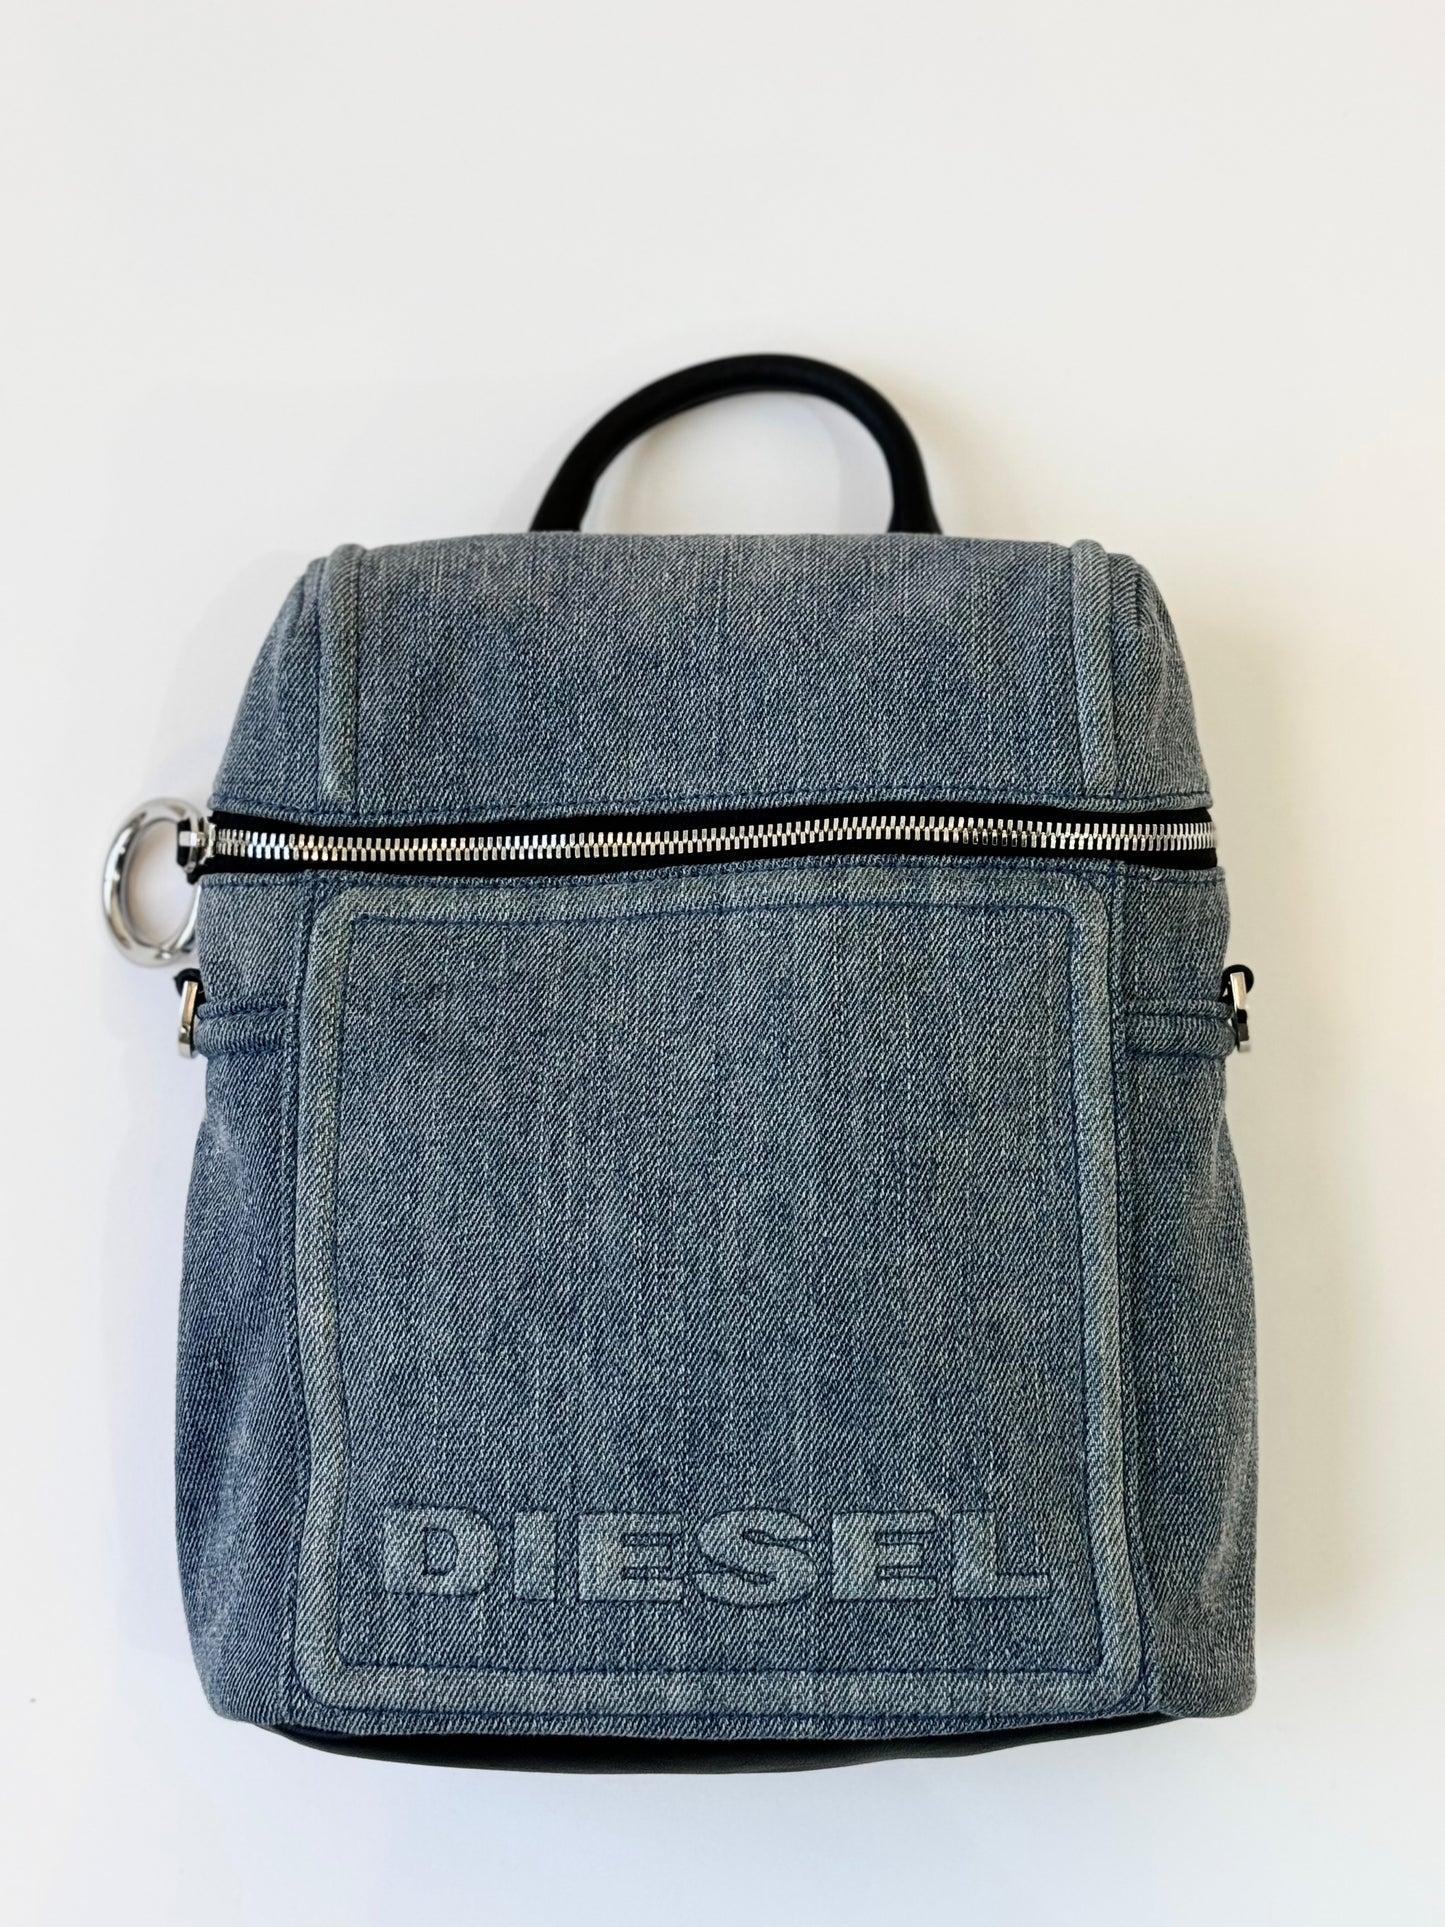 Diesel Denim Handbag